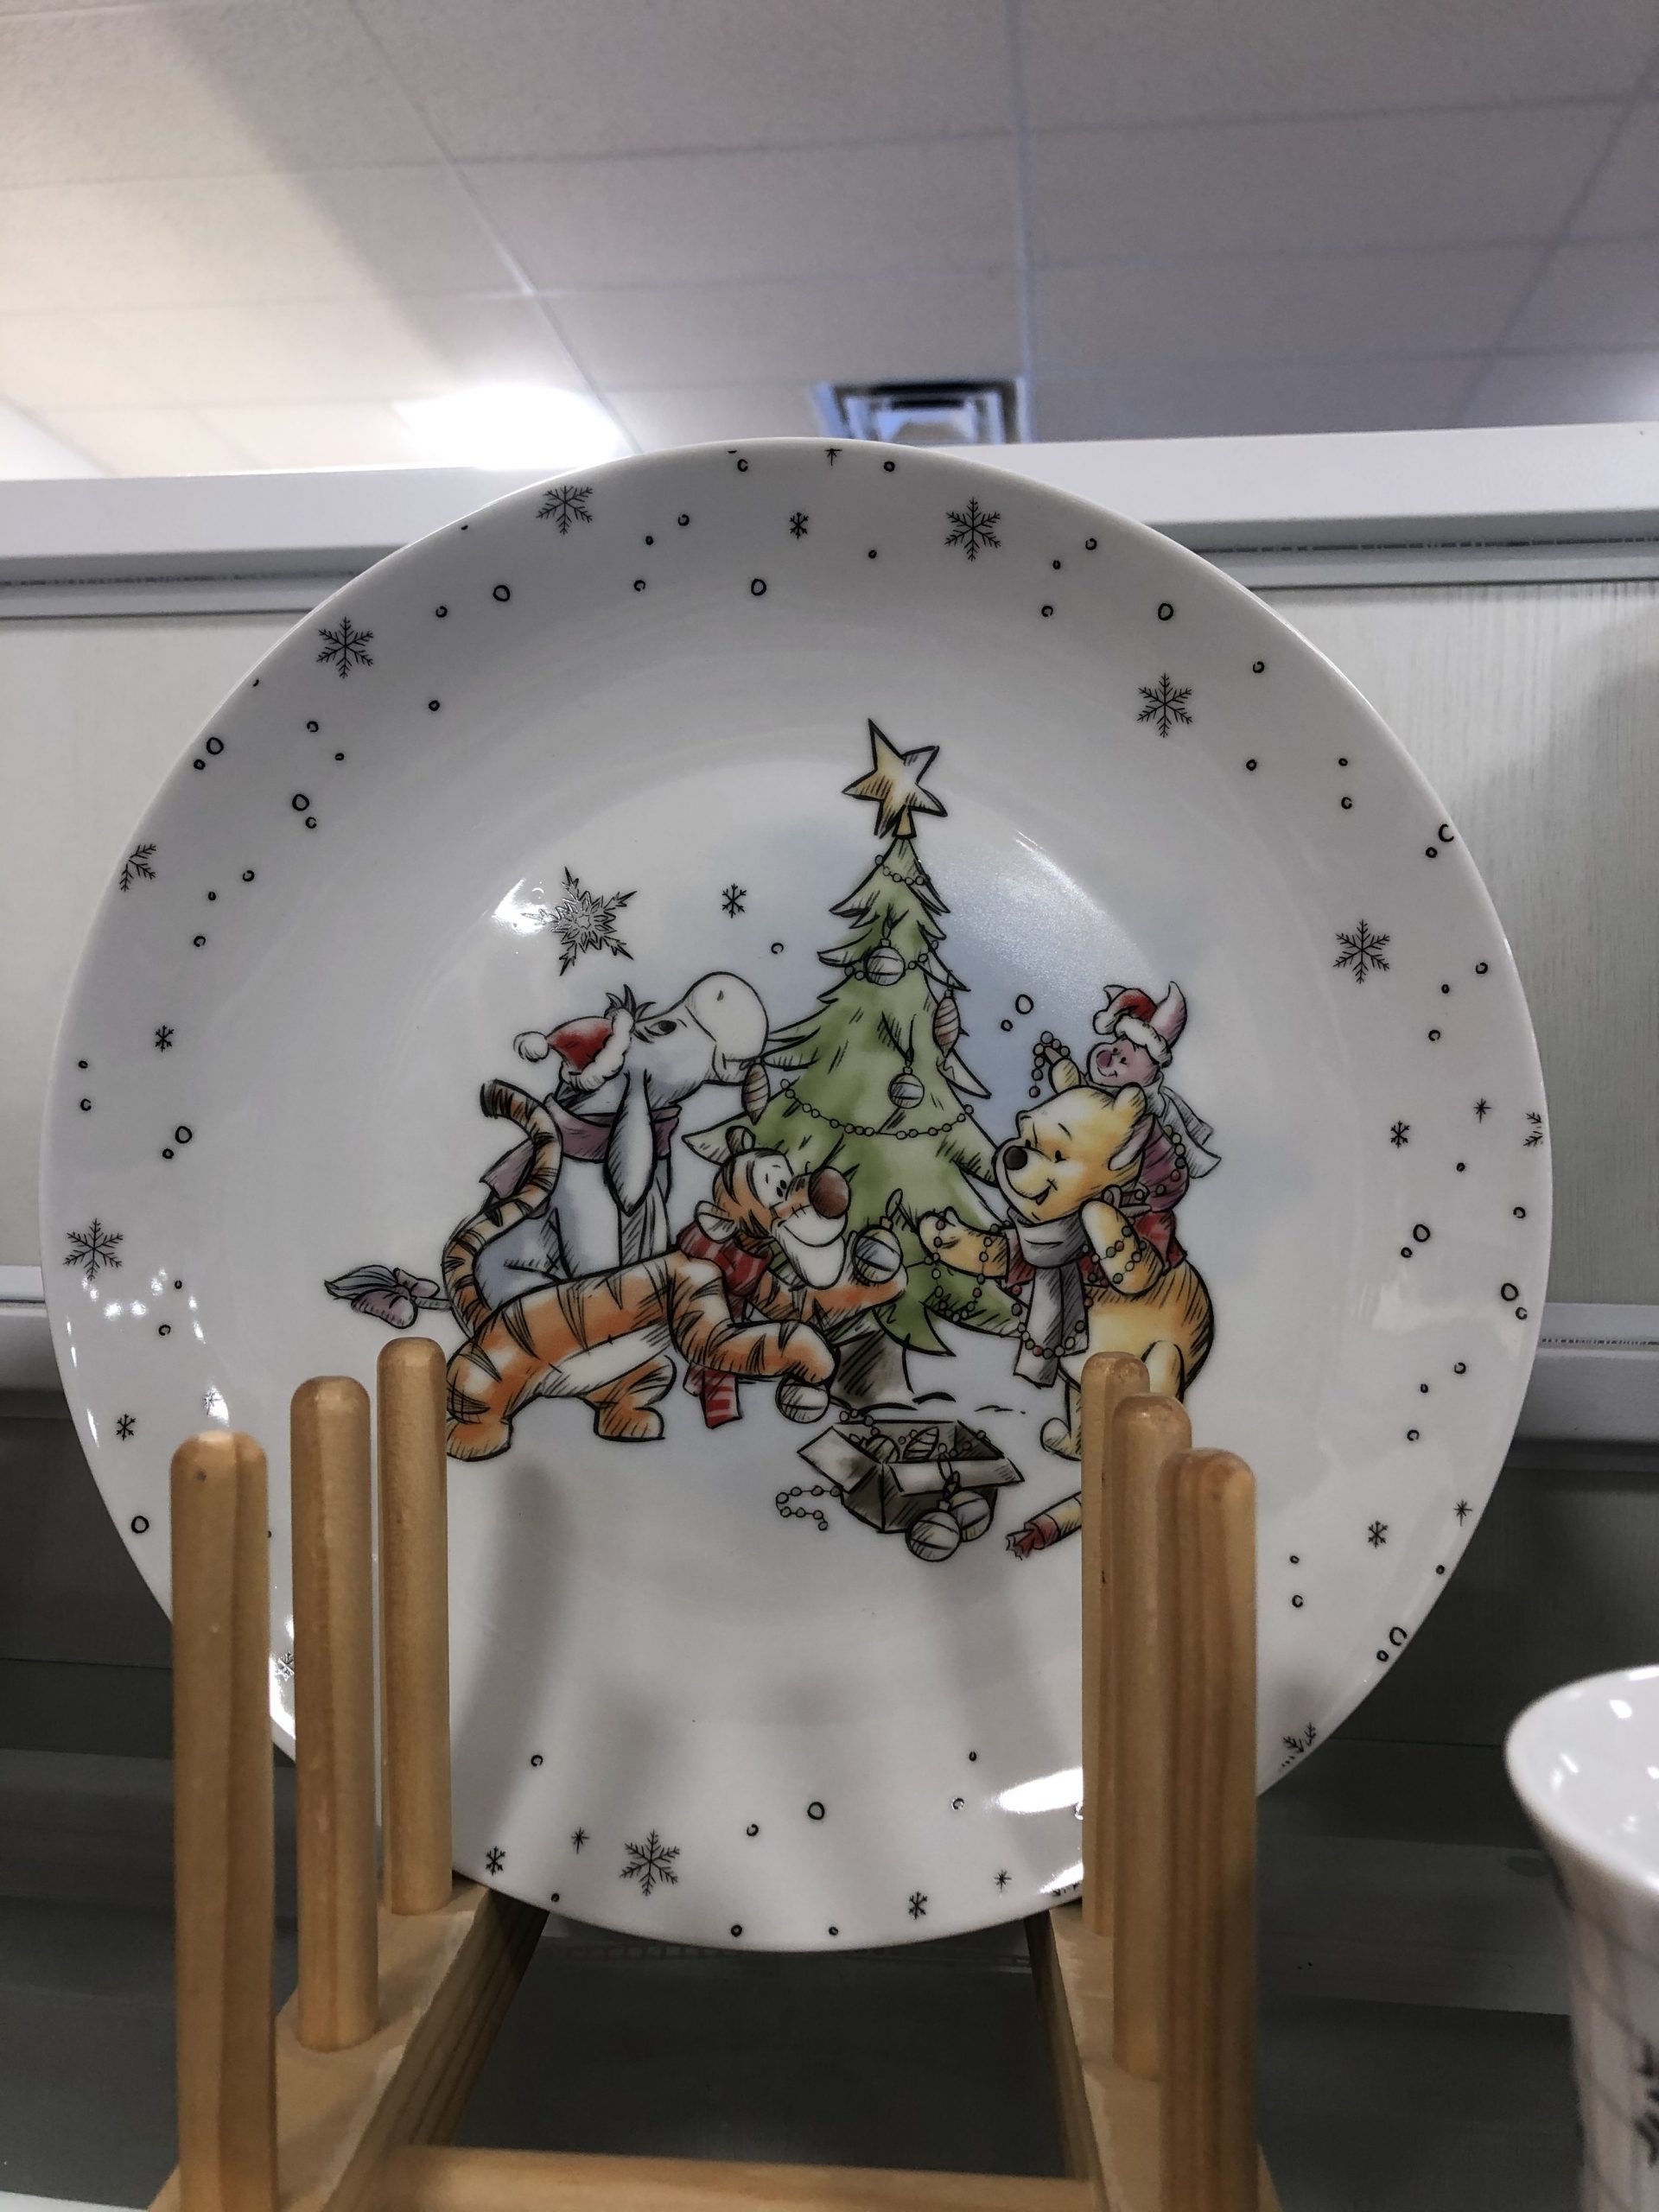 Mickey and Pooh Holiday Plates At Home Goods - Disney Fashion Blog